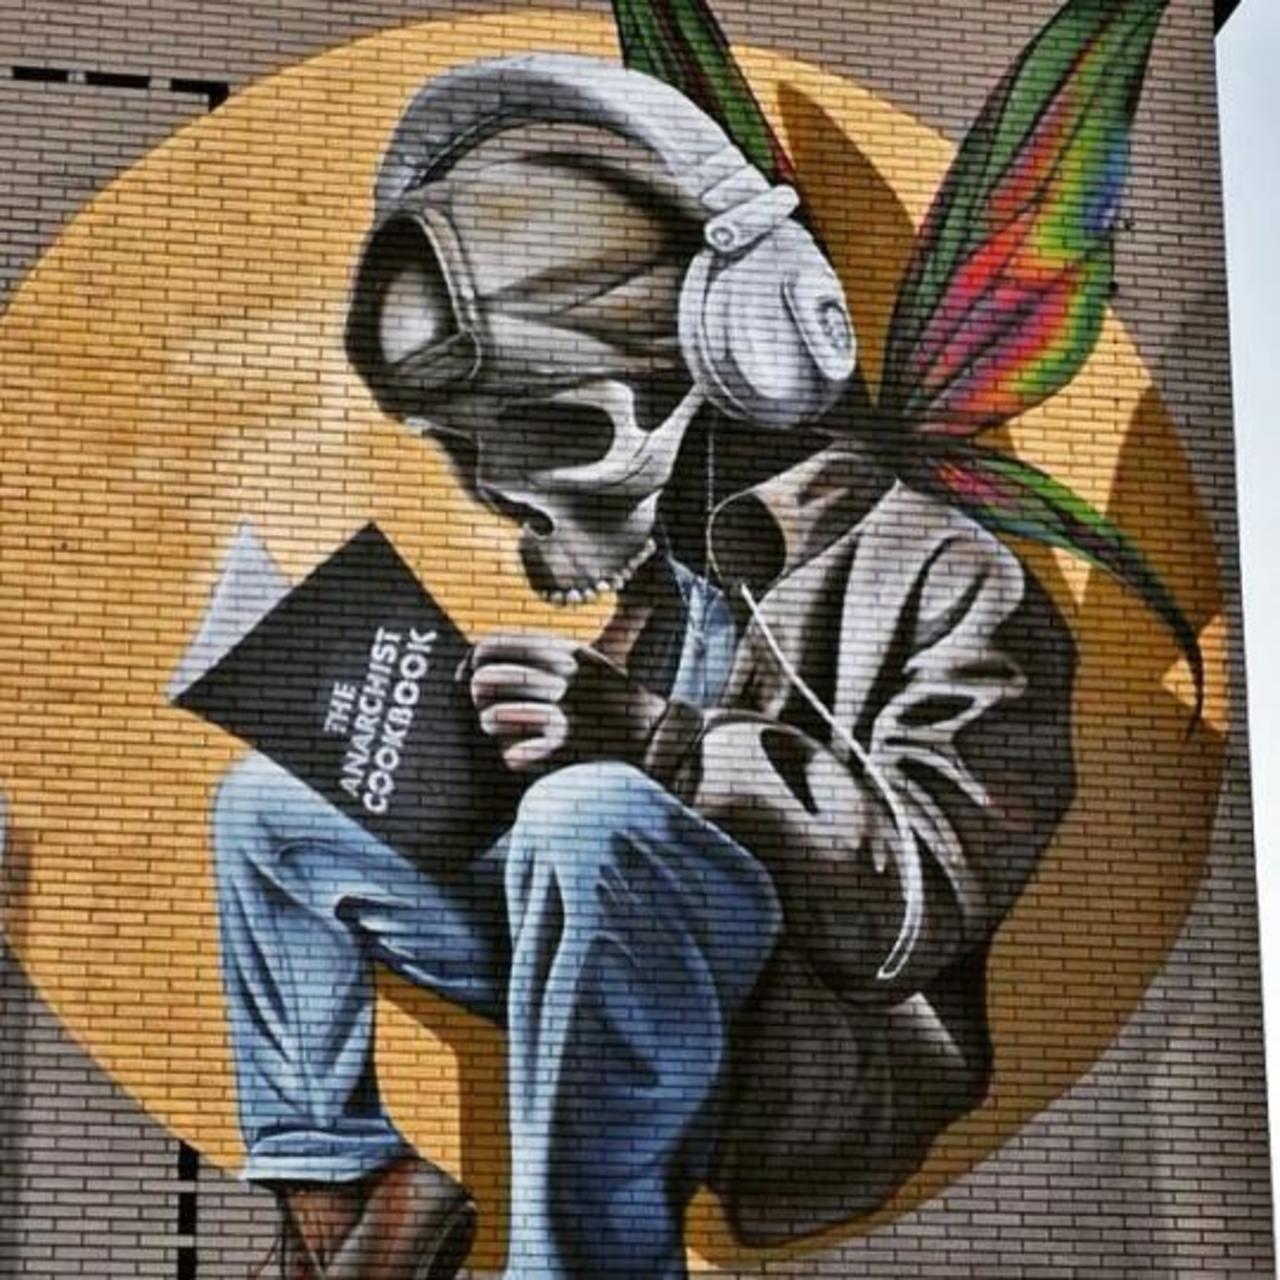 #Streetart #urbanart #sprayart #sticker #stencil #graffiti #mural
 "The Anarchist Cookbook" by #artist Mataone http://t.co/5CYmu2SVVQ